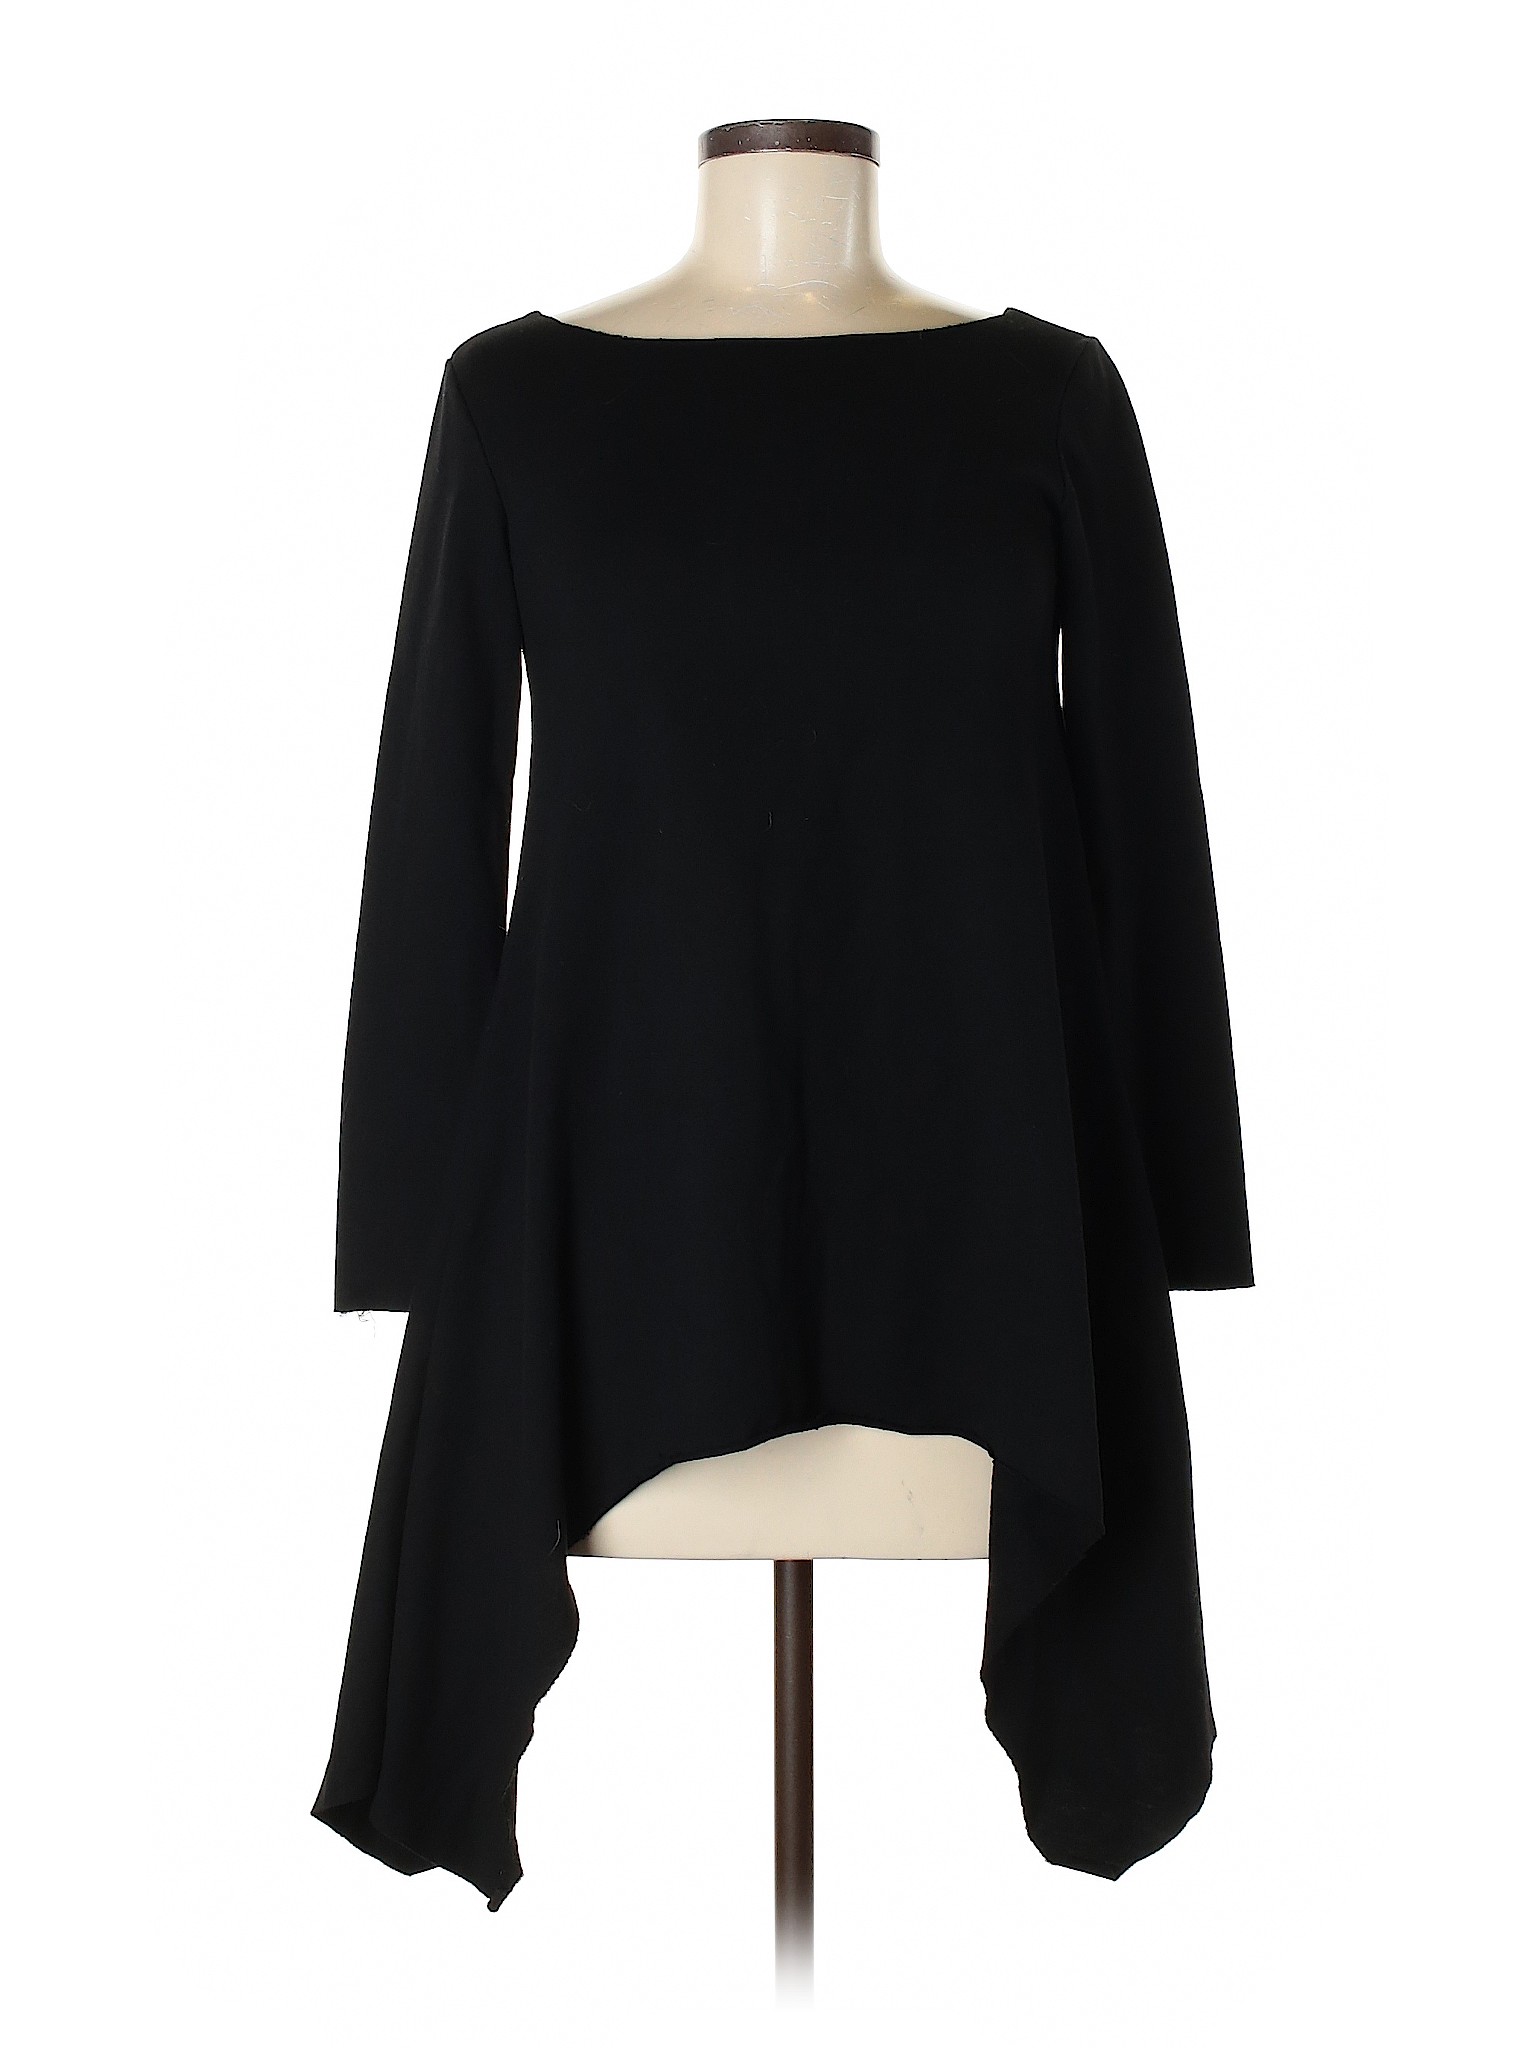 Richcoco Women Black Long Sleeve Top M | eBay